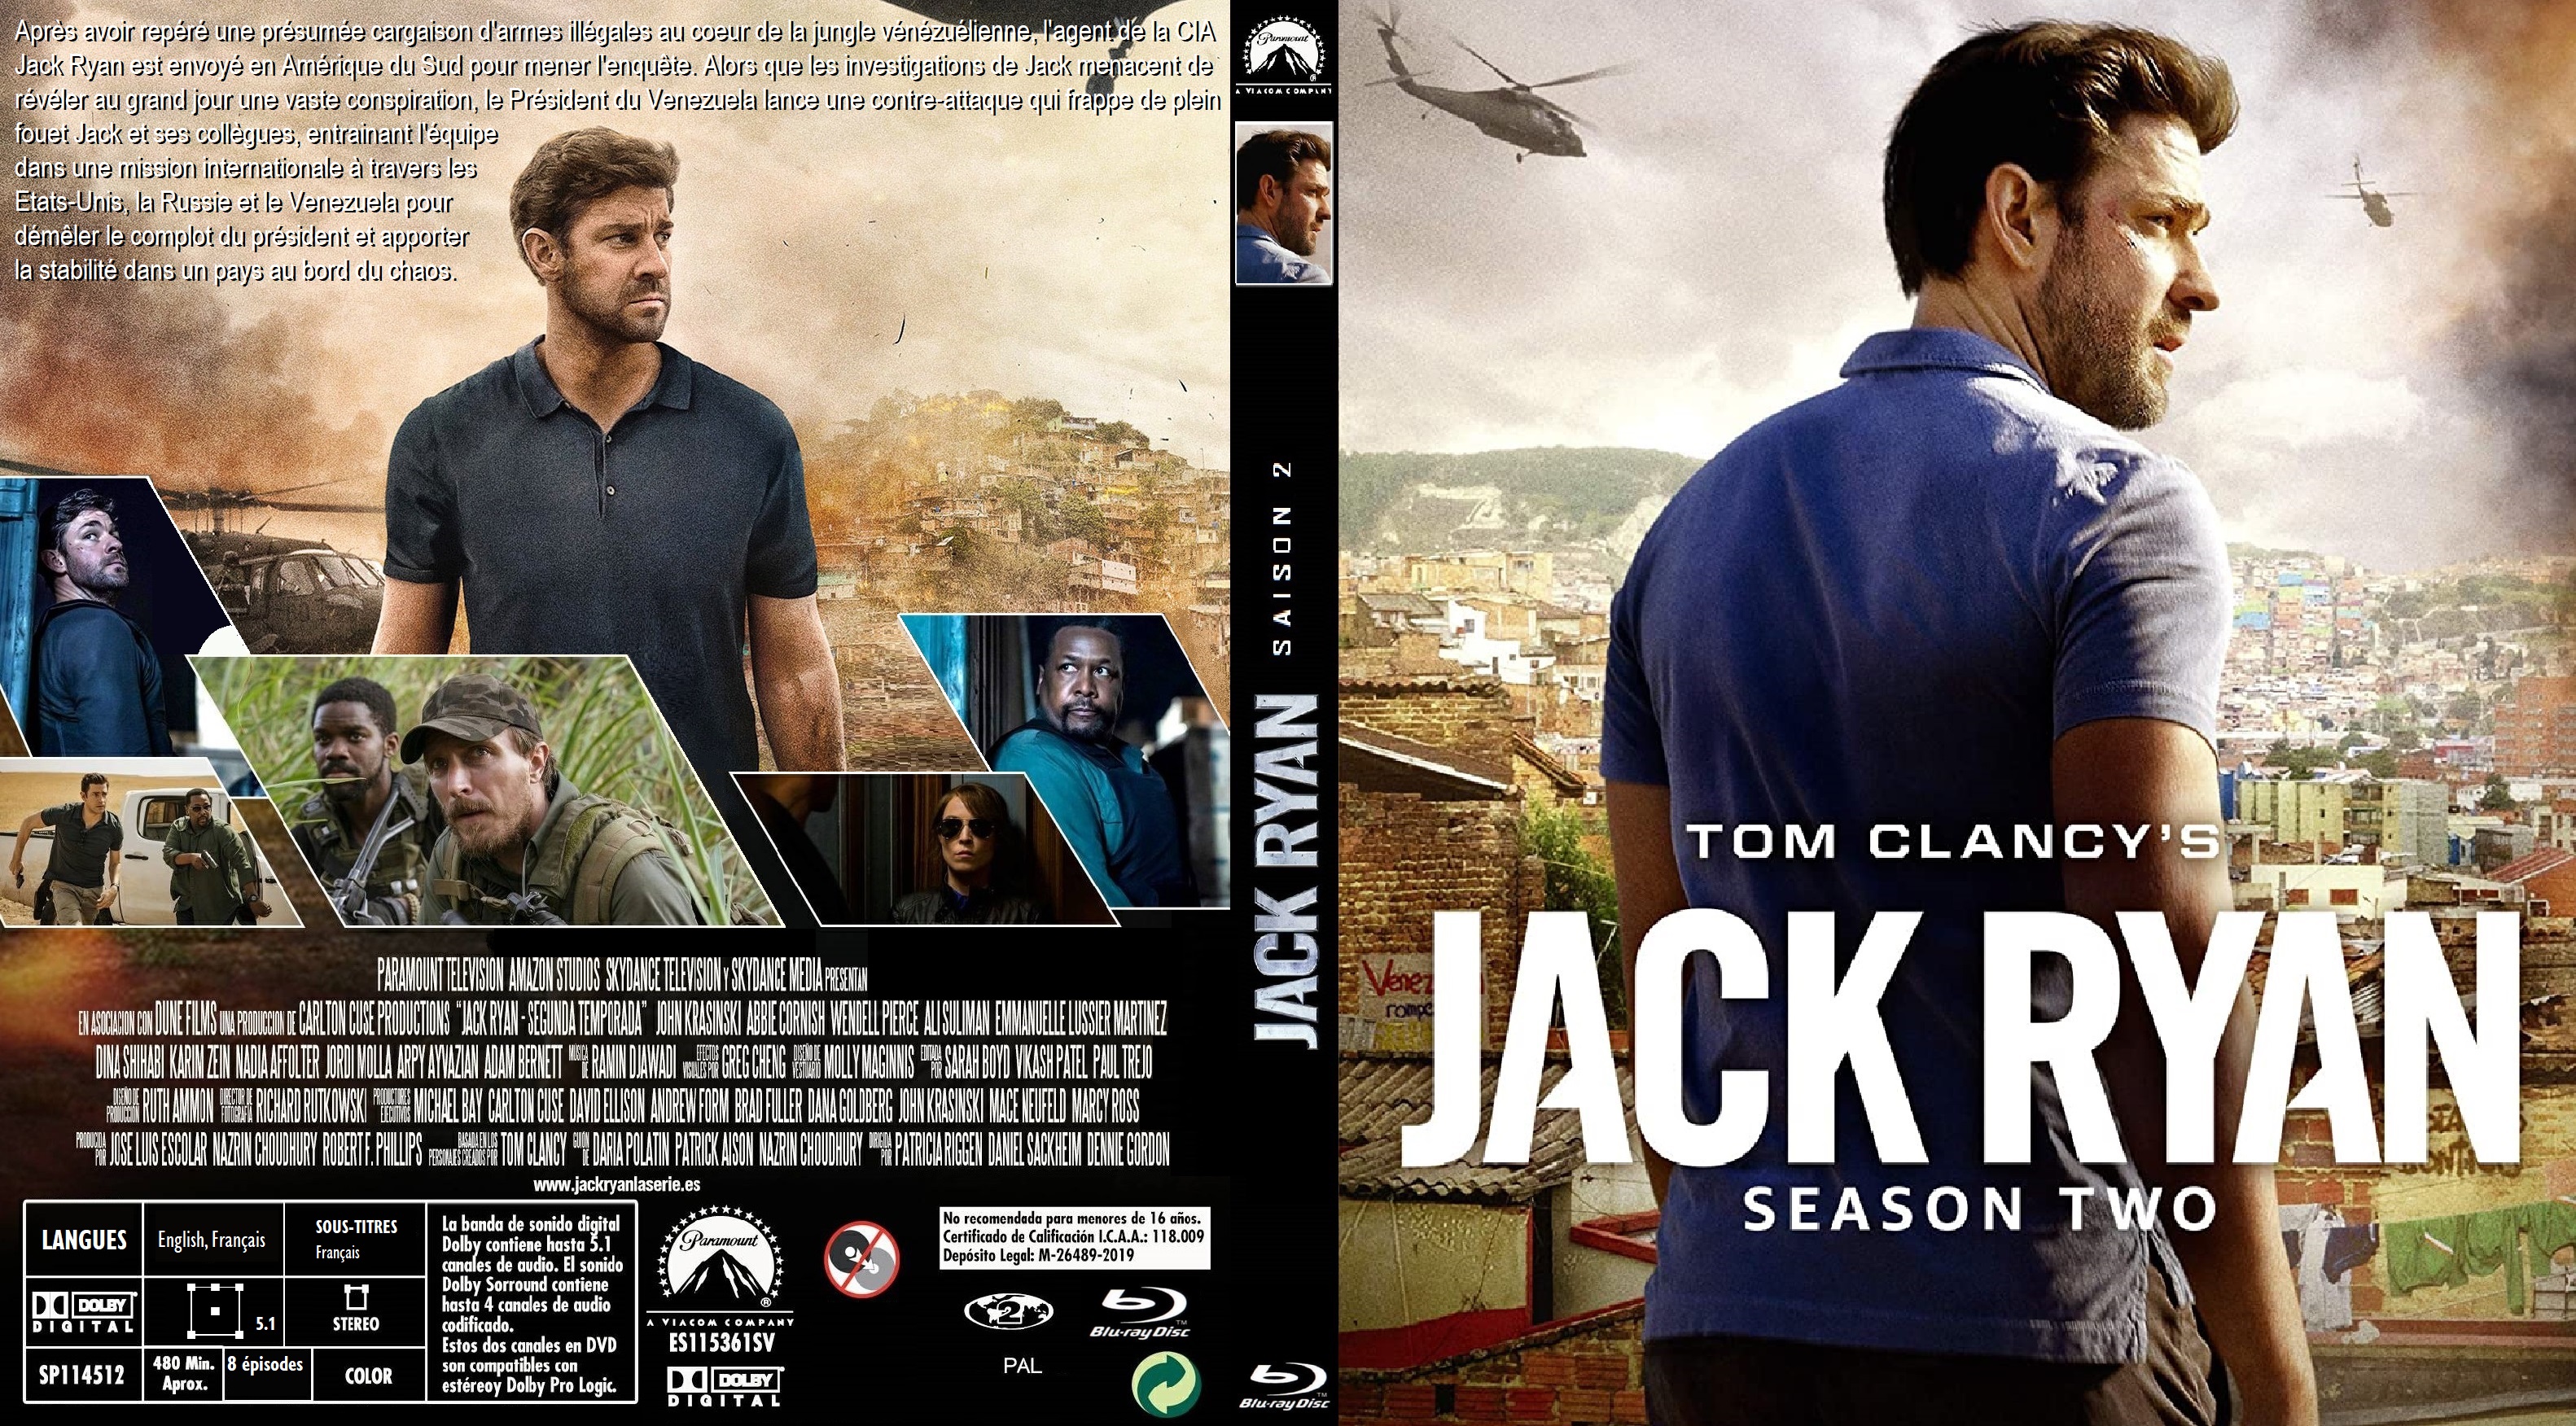 Jaquette DVD Jack Ryan saison 2 custom (BLU-RAY) v2